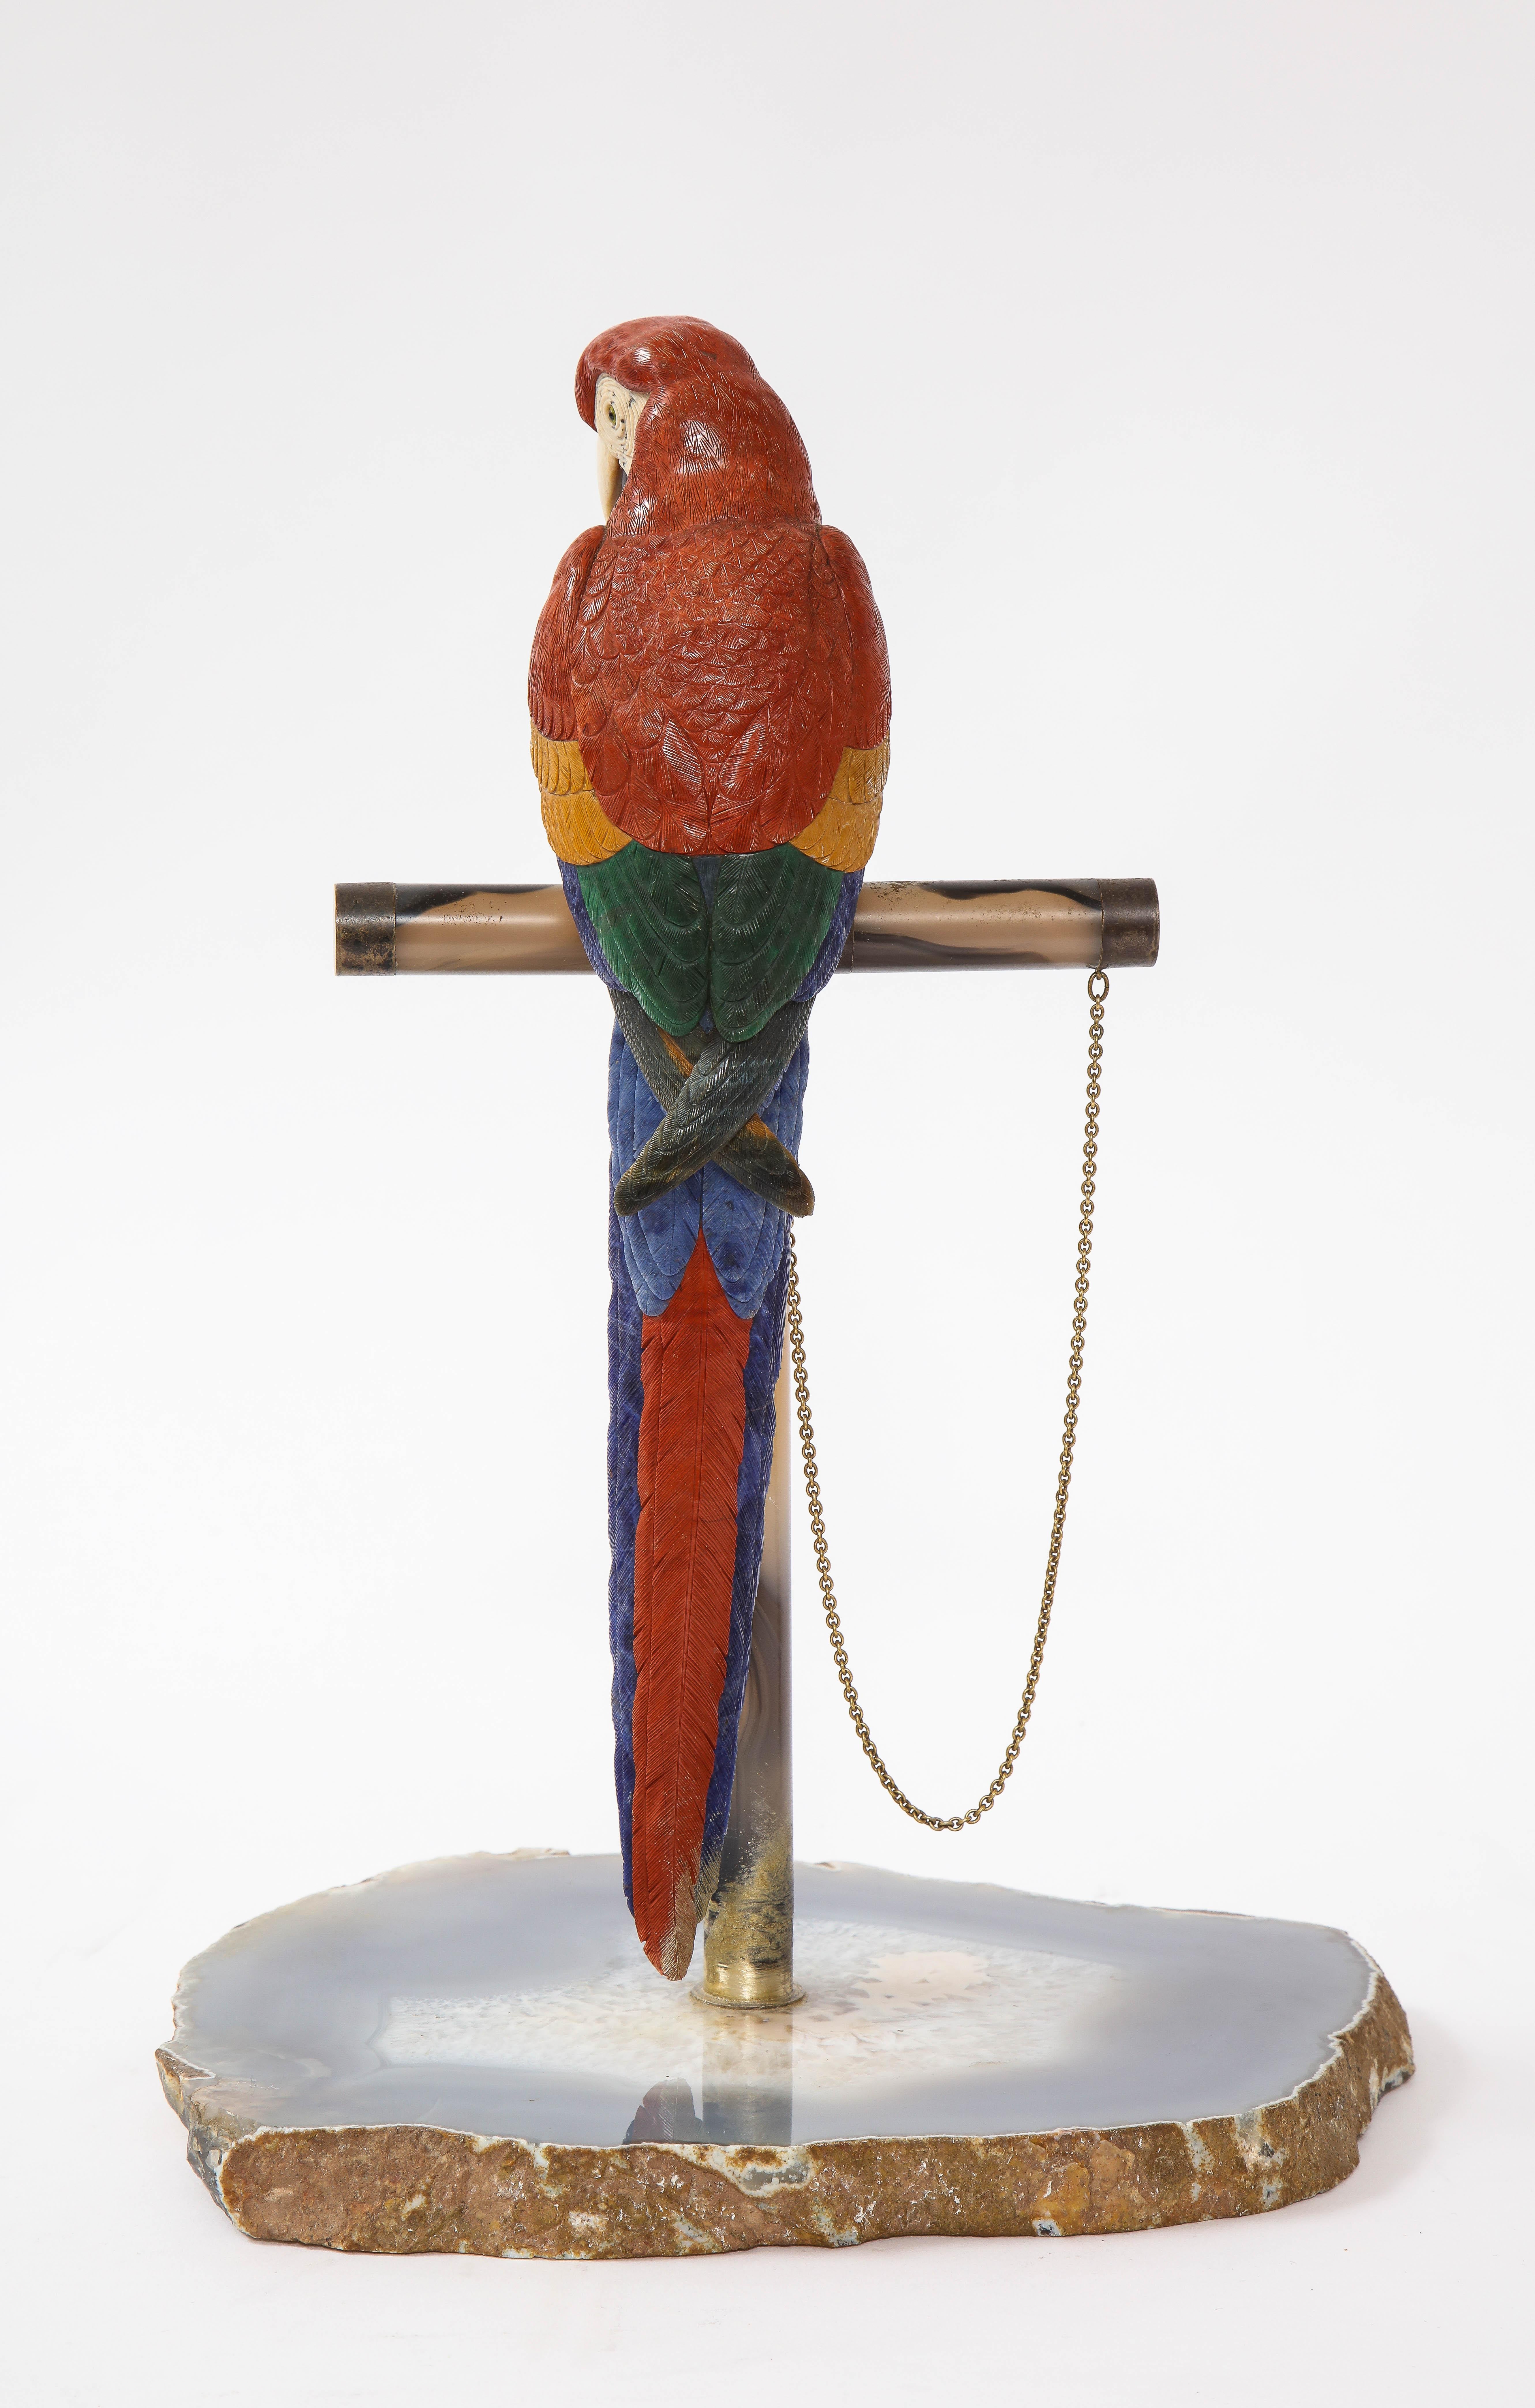 Modern Semi Precious Stone & Metal Model of a Scarlet Macaw Parrot, P. Müller, Swiss